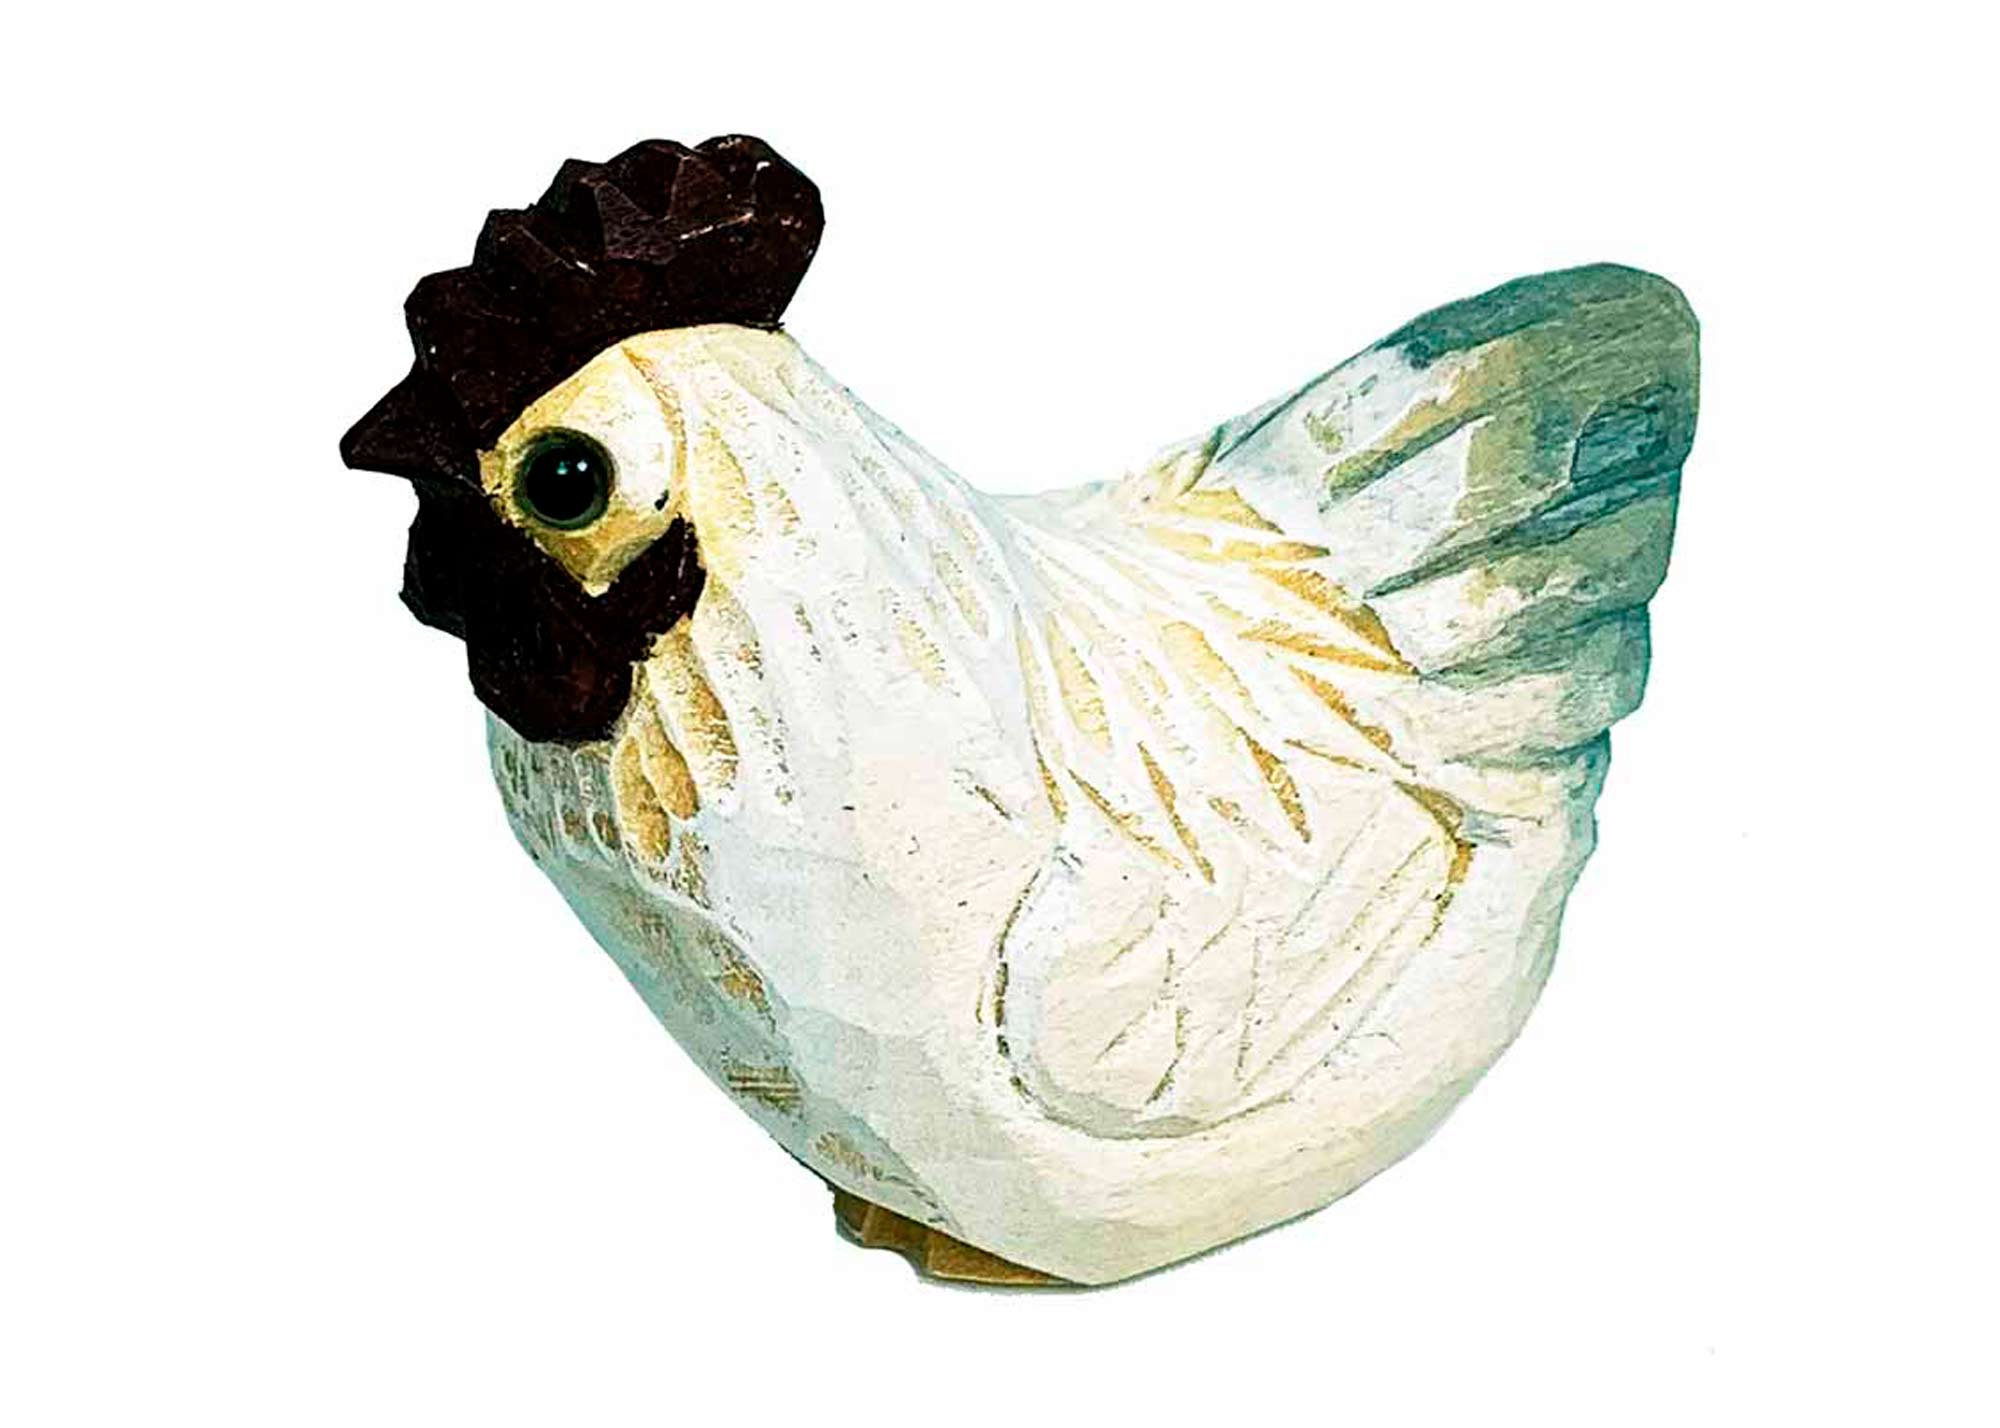 Buy Carved Chicken Hen Figurine at GoldenCockerel.com